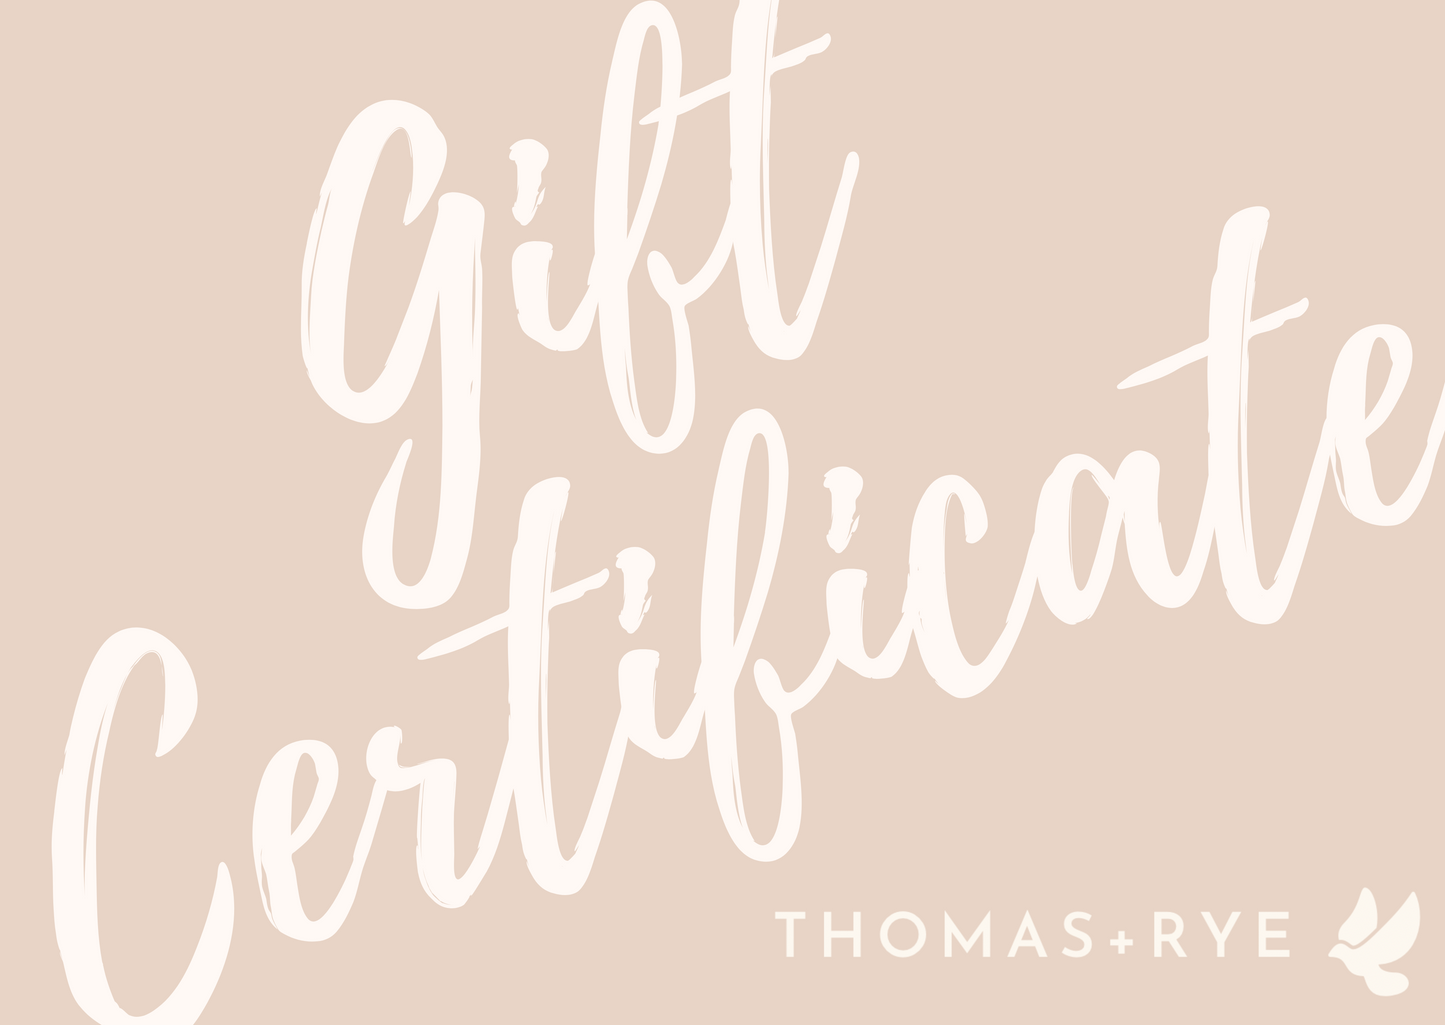 Thomas + Rye Gift Card